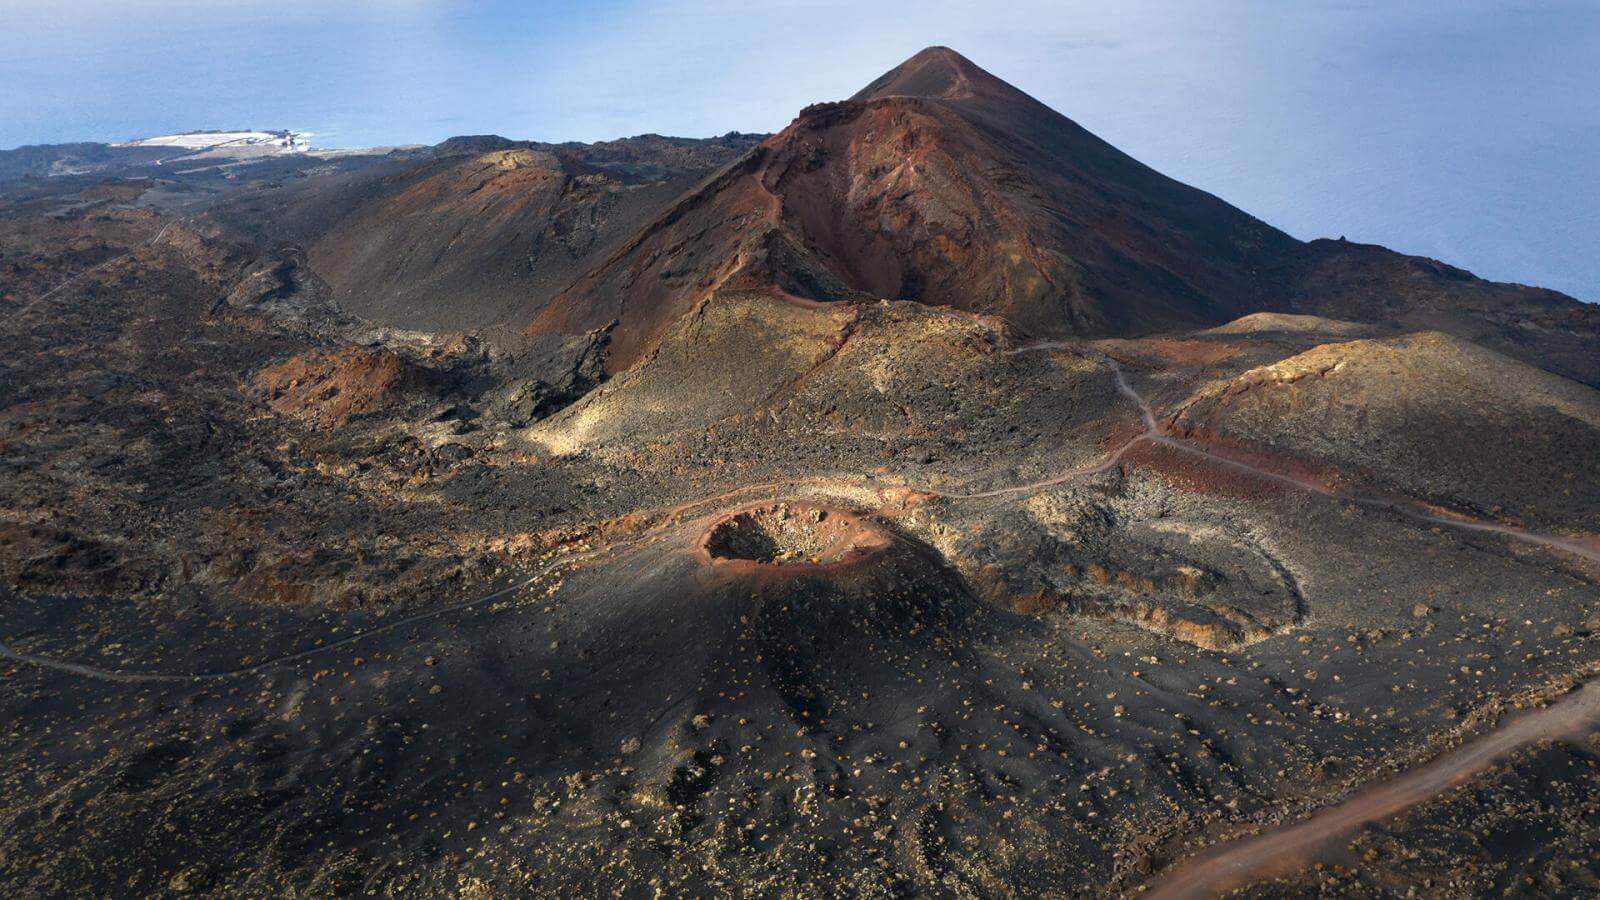 File:La Palma - Volcan de Teneguia - 4.jpg - Wikimedia Commons